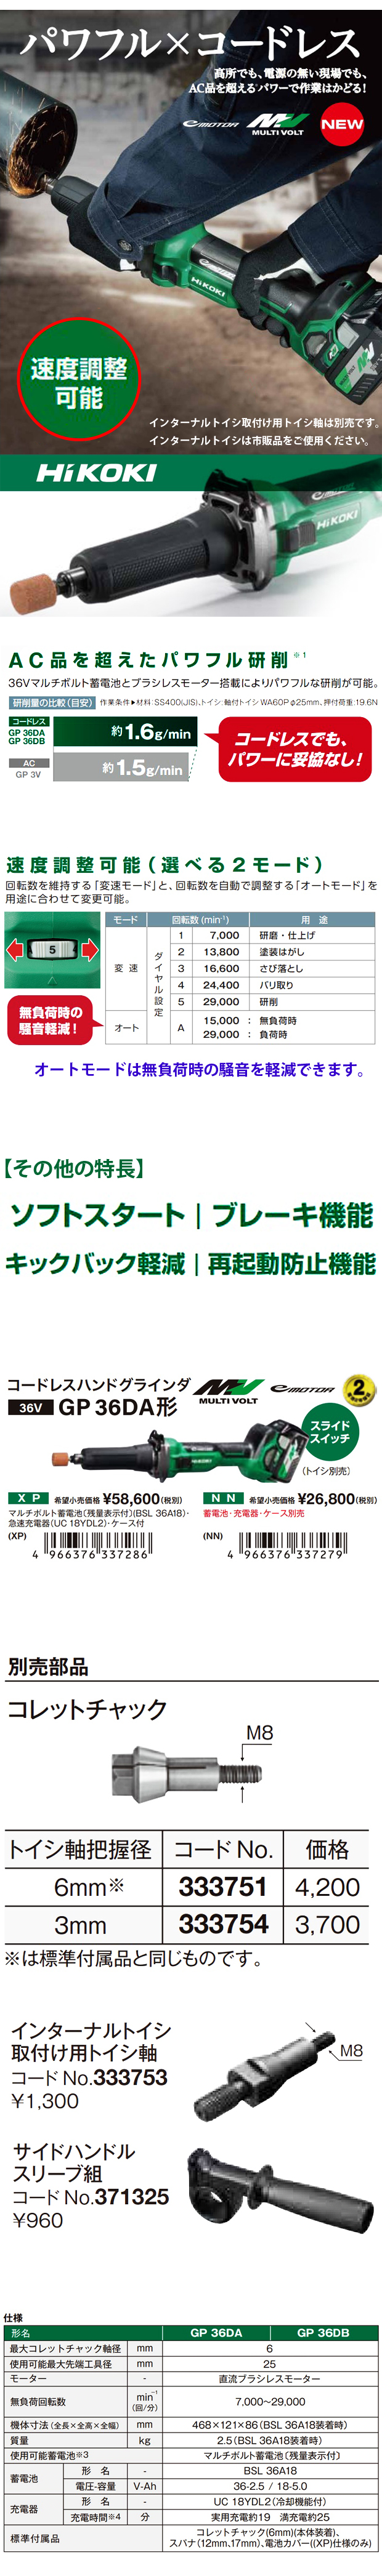 HiKOKI マルチボルト（36V）コードレスハンドグラインダ GP36DA